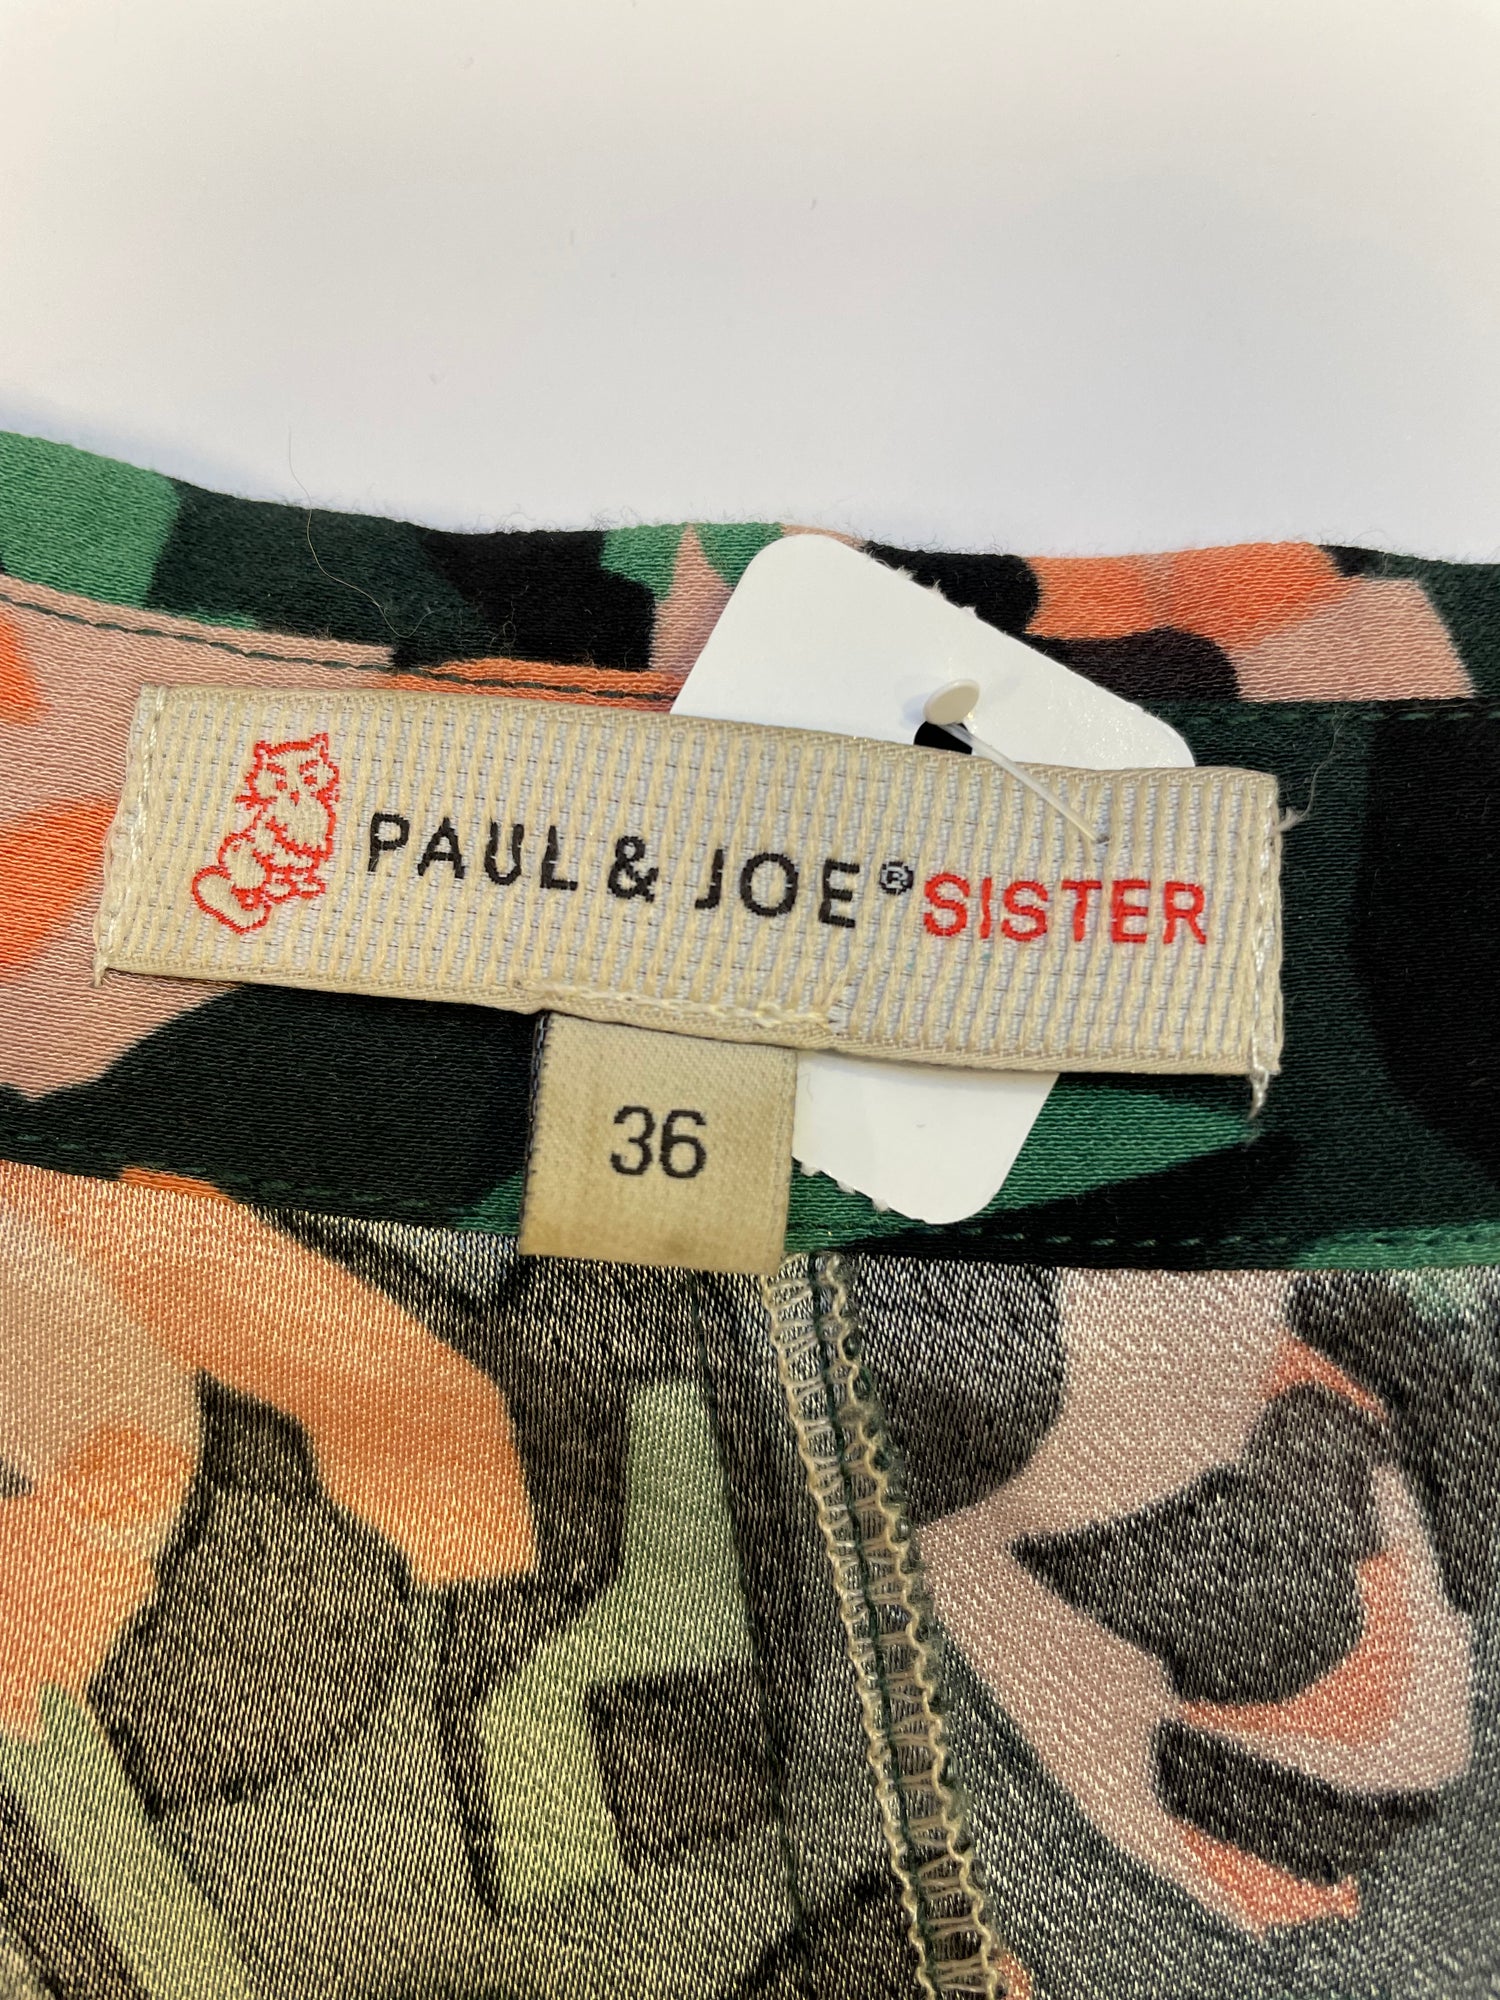 Paul &amp; Joe sister jurk tuniek blouse maat S 36 donkergroen zalm groen viscose